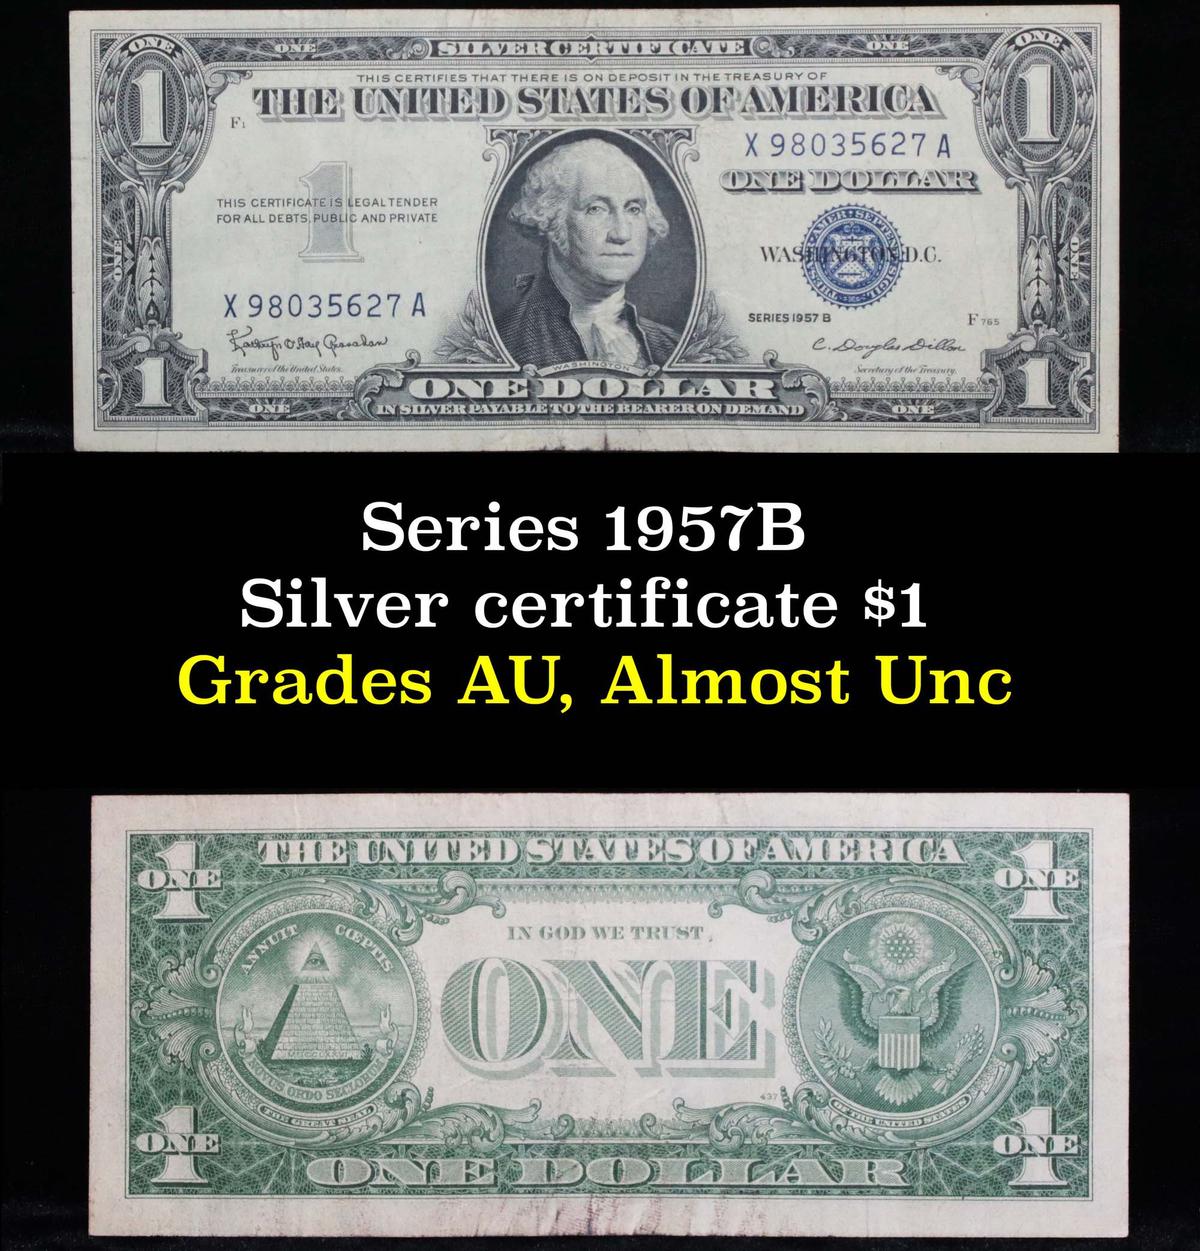 Series 1957B Silver certificate $1 Grades AU, Almost Unc